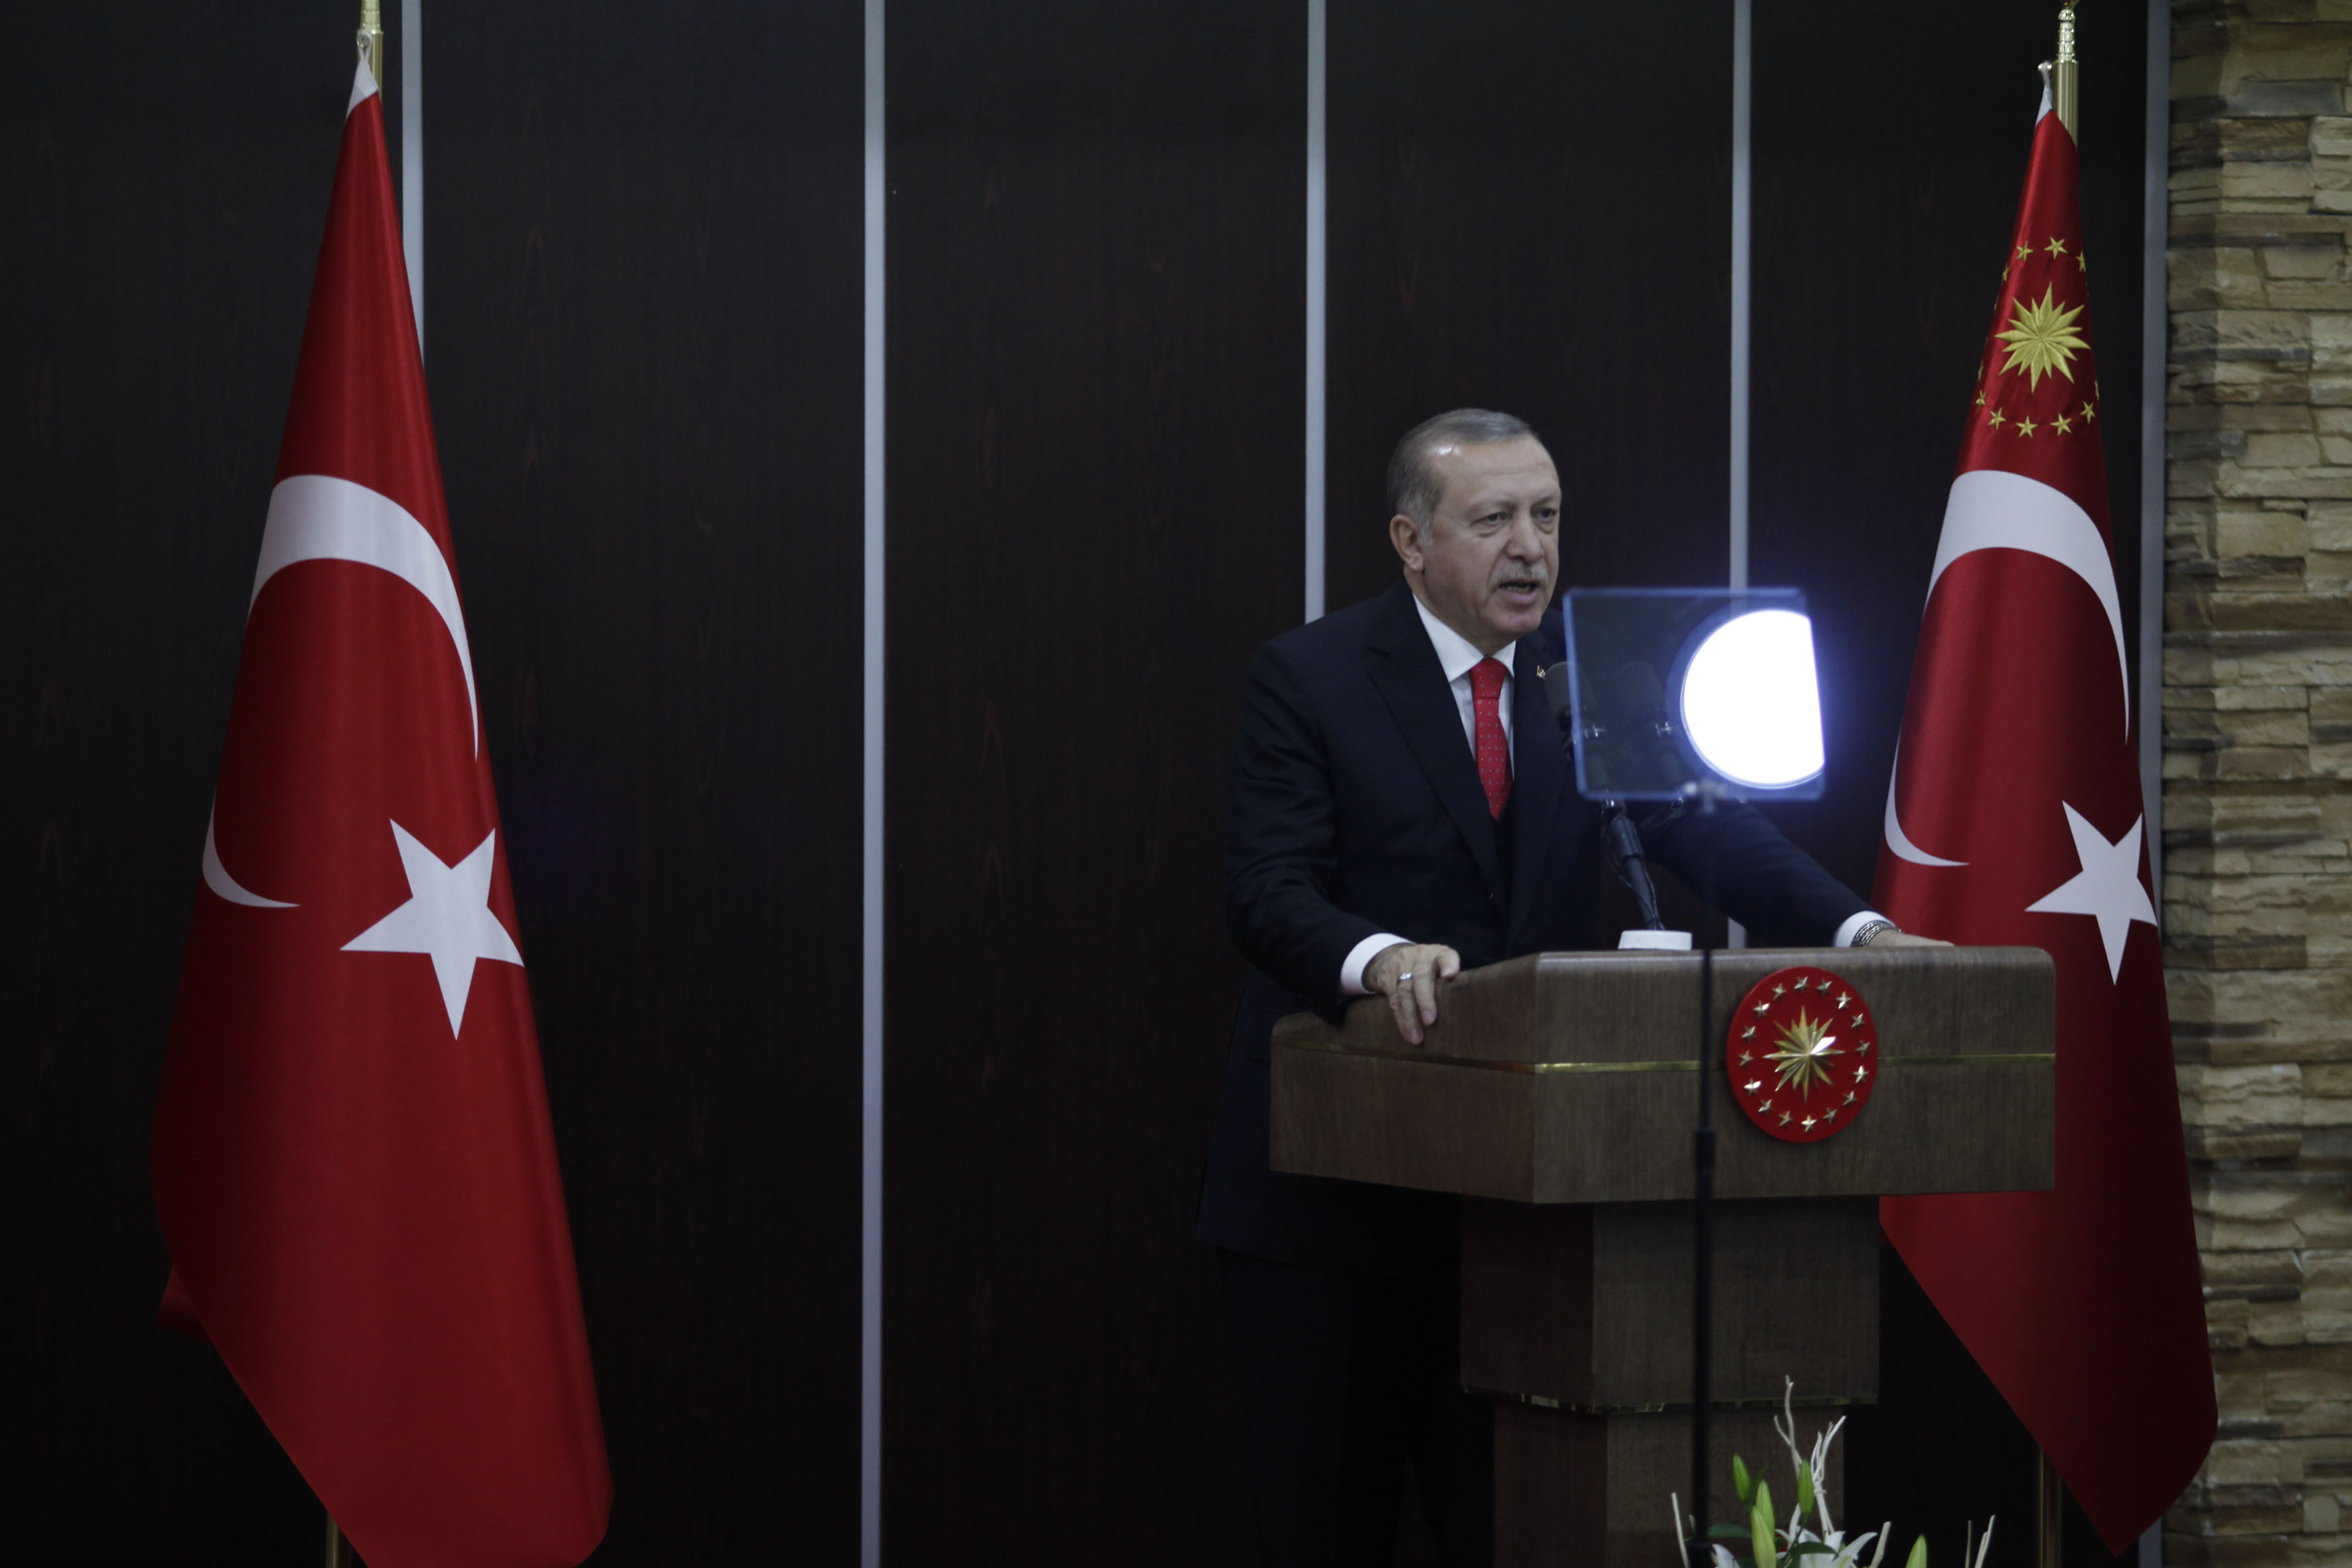 Senior advisor to Erdogan heightens saber-rattling against Greece, Cyprus